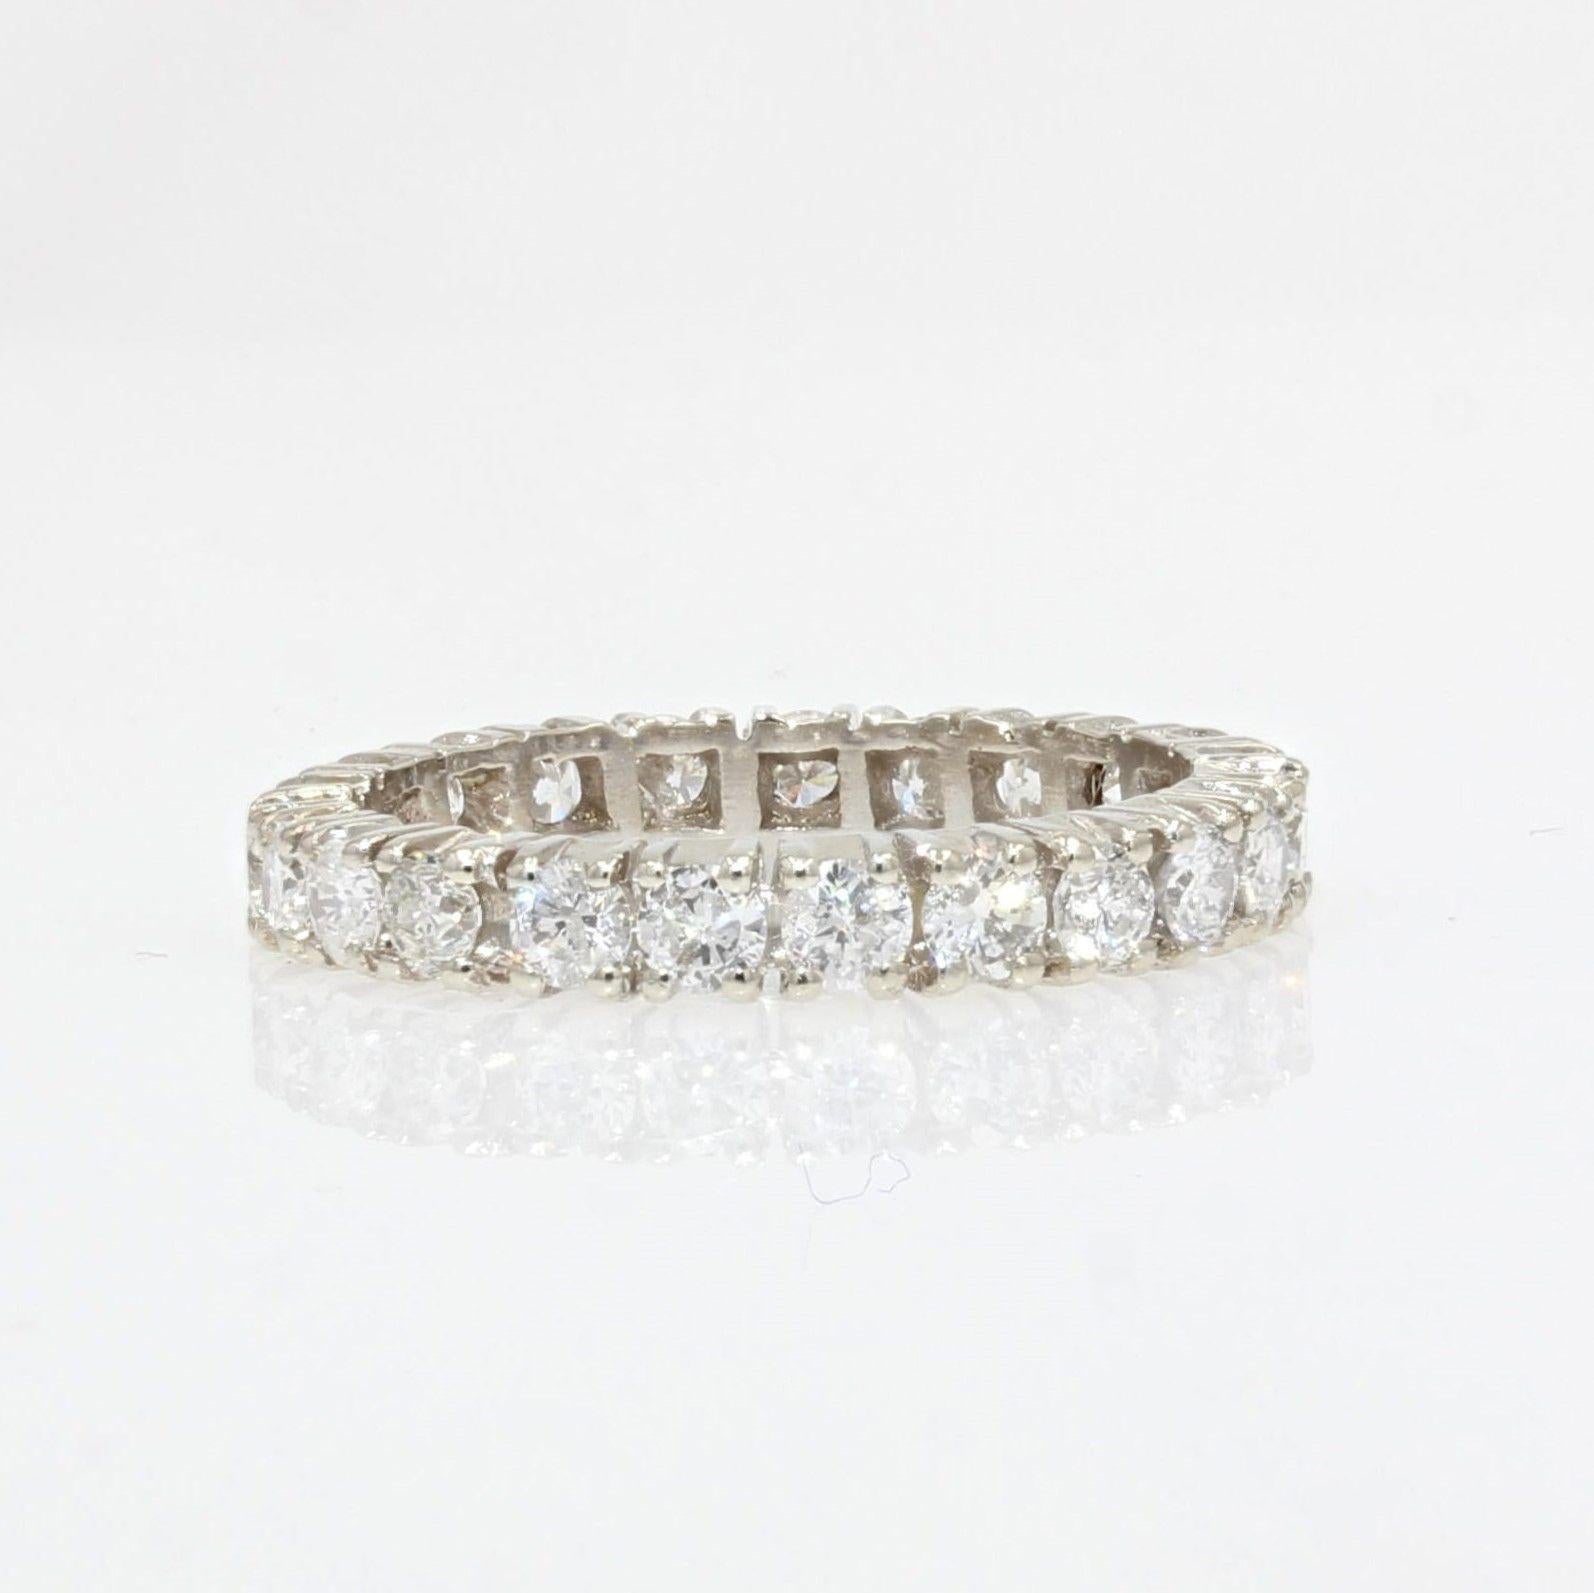 French Modern Diamonds 18 Karat White Gold Band Wedding Ring For Sale 1